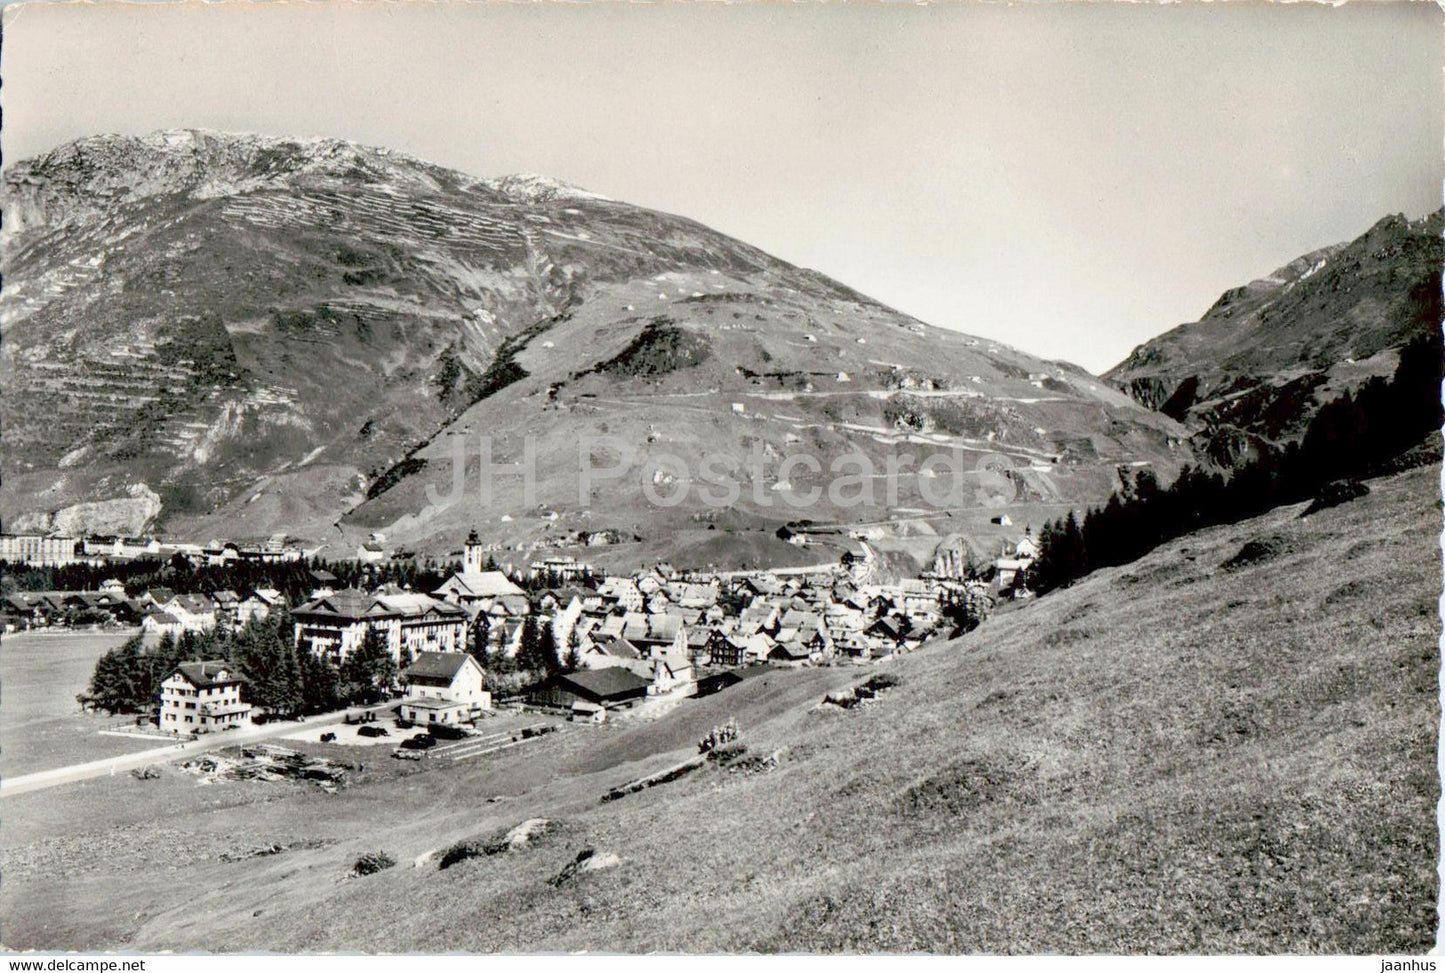 Andermatt 1444  m - Oberalp Pass - 4208 - old postcard - Switzerland - unused - JH Postcards